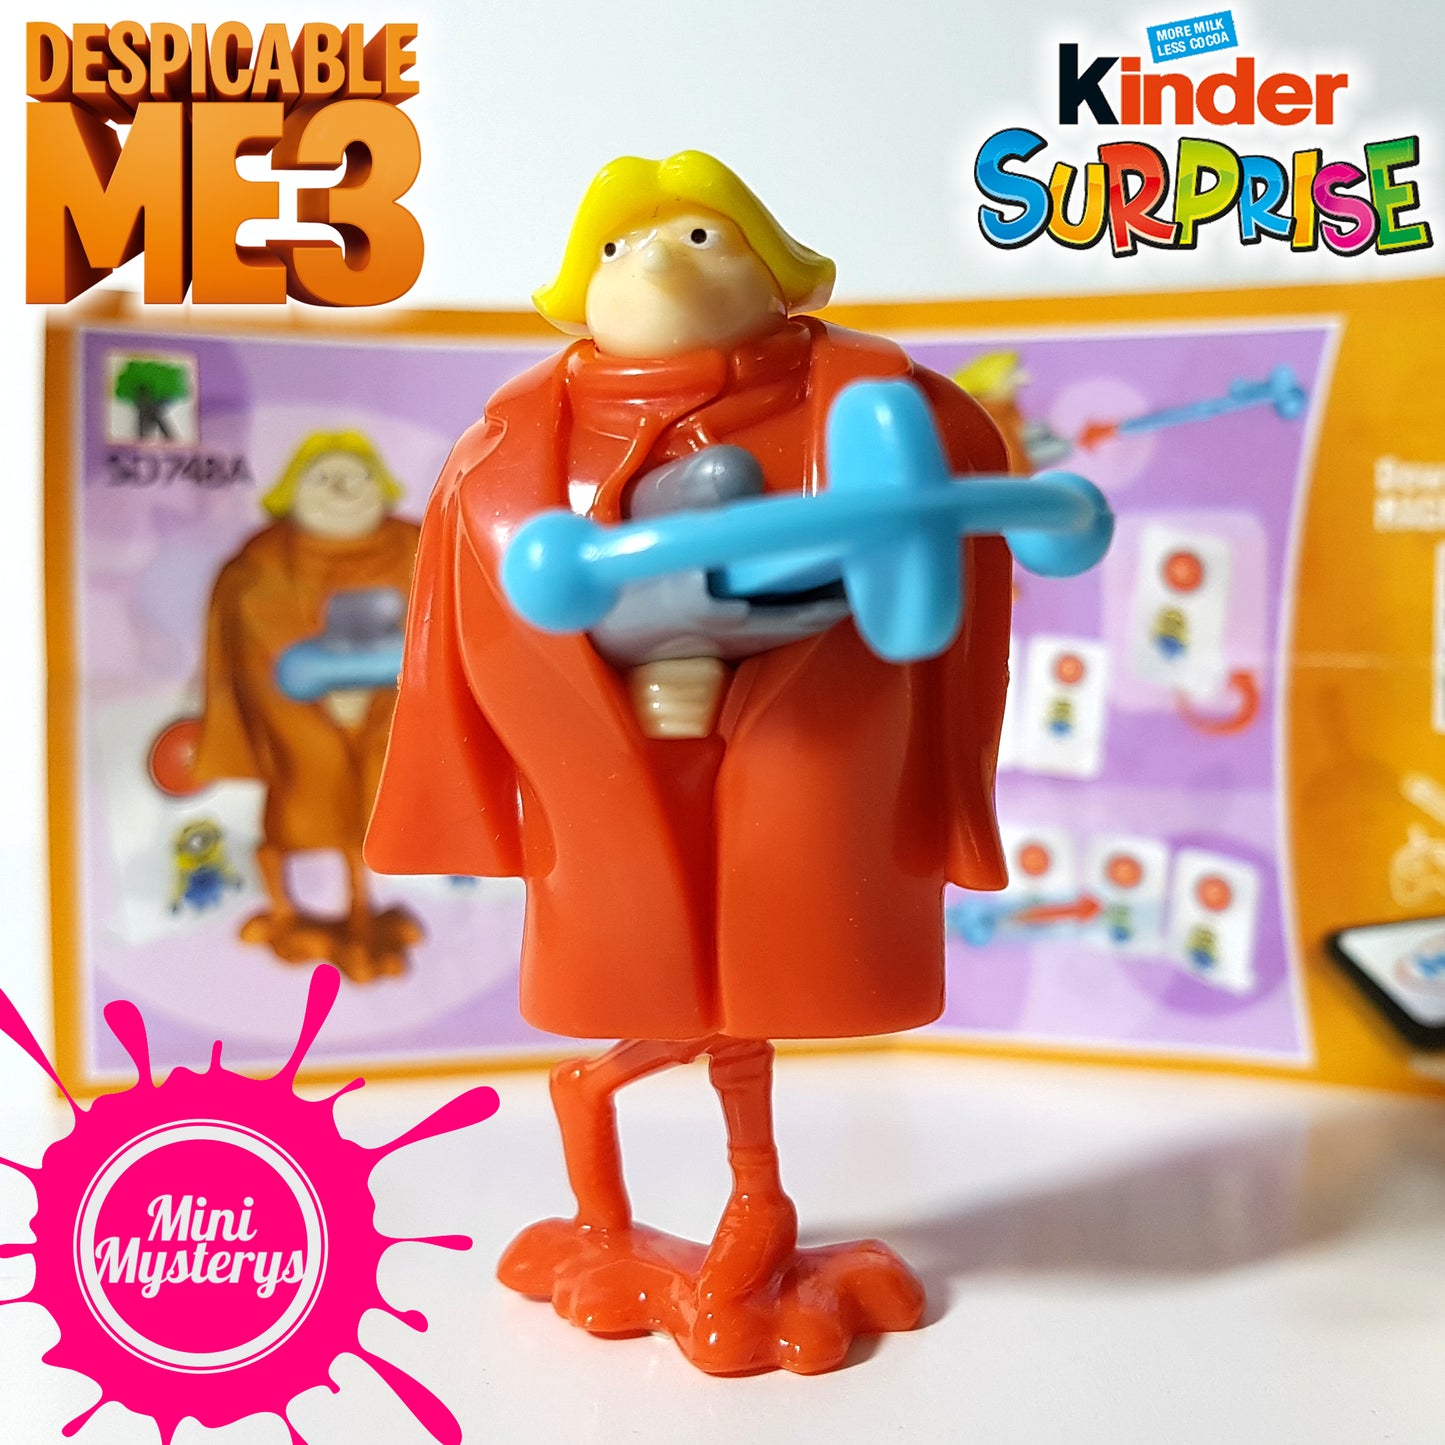 Despicable Me 3 Kinder Surprise Figures - Choose Yours